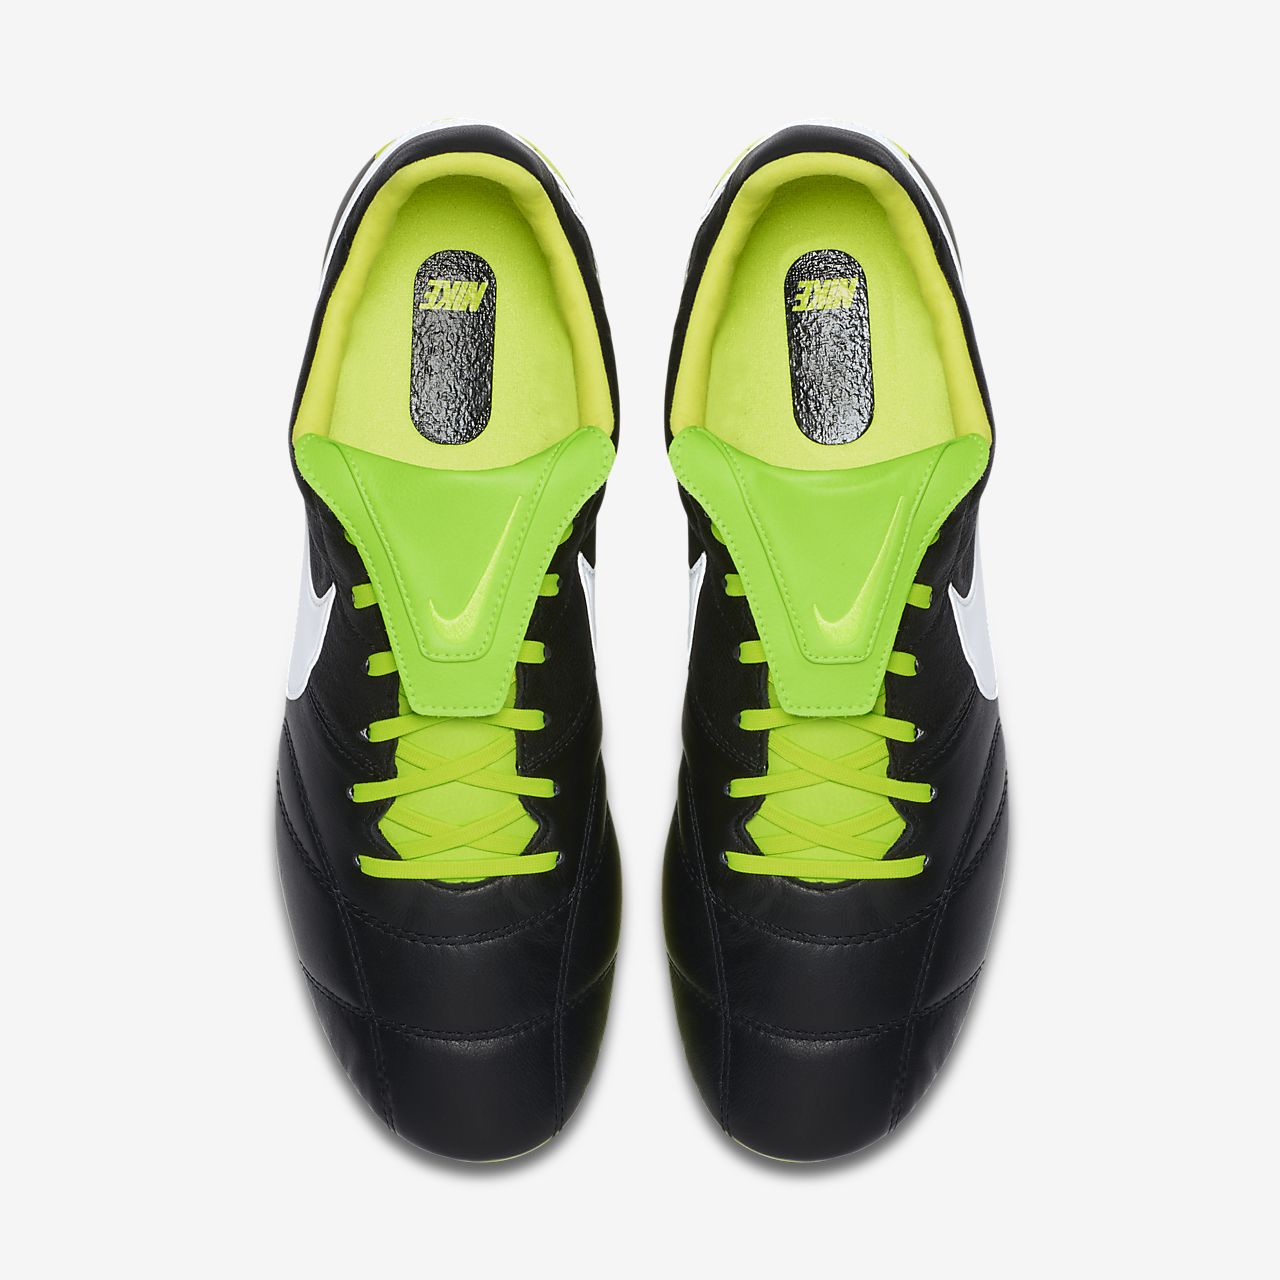 Nike Premier II FG - Black / Volt / Electric Green / White - Football ...